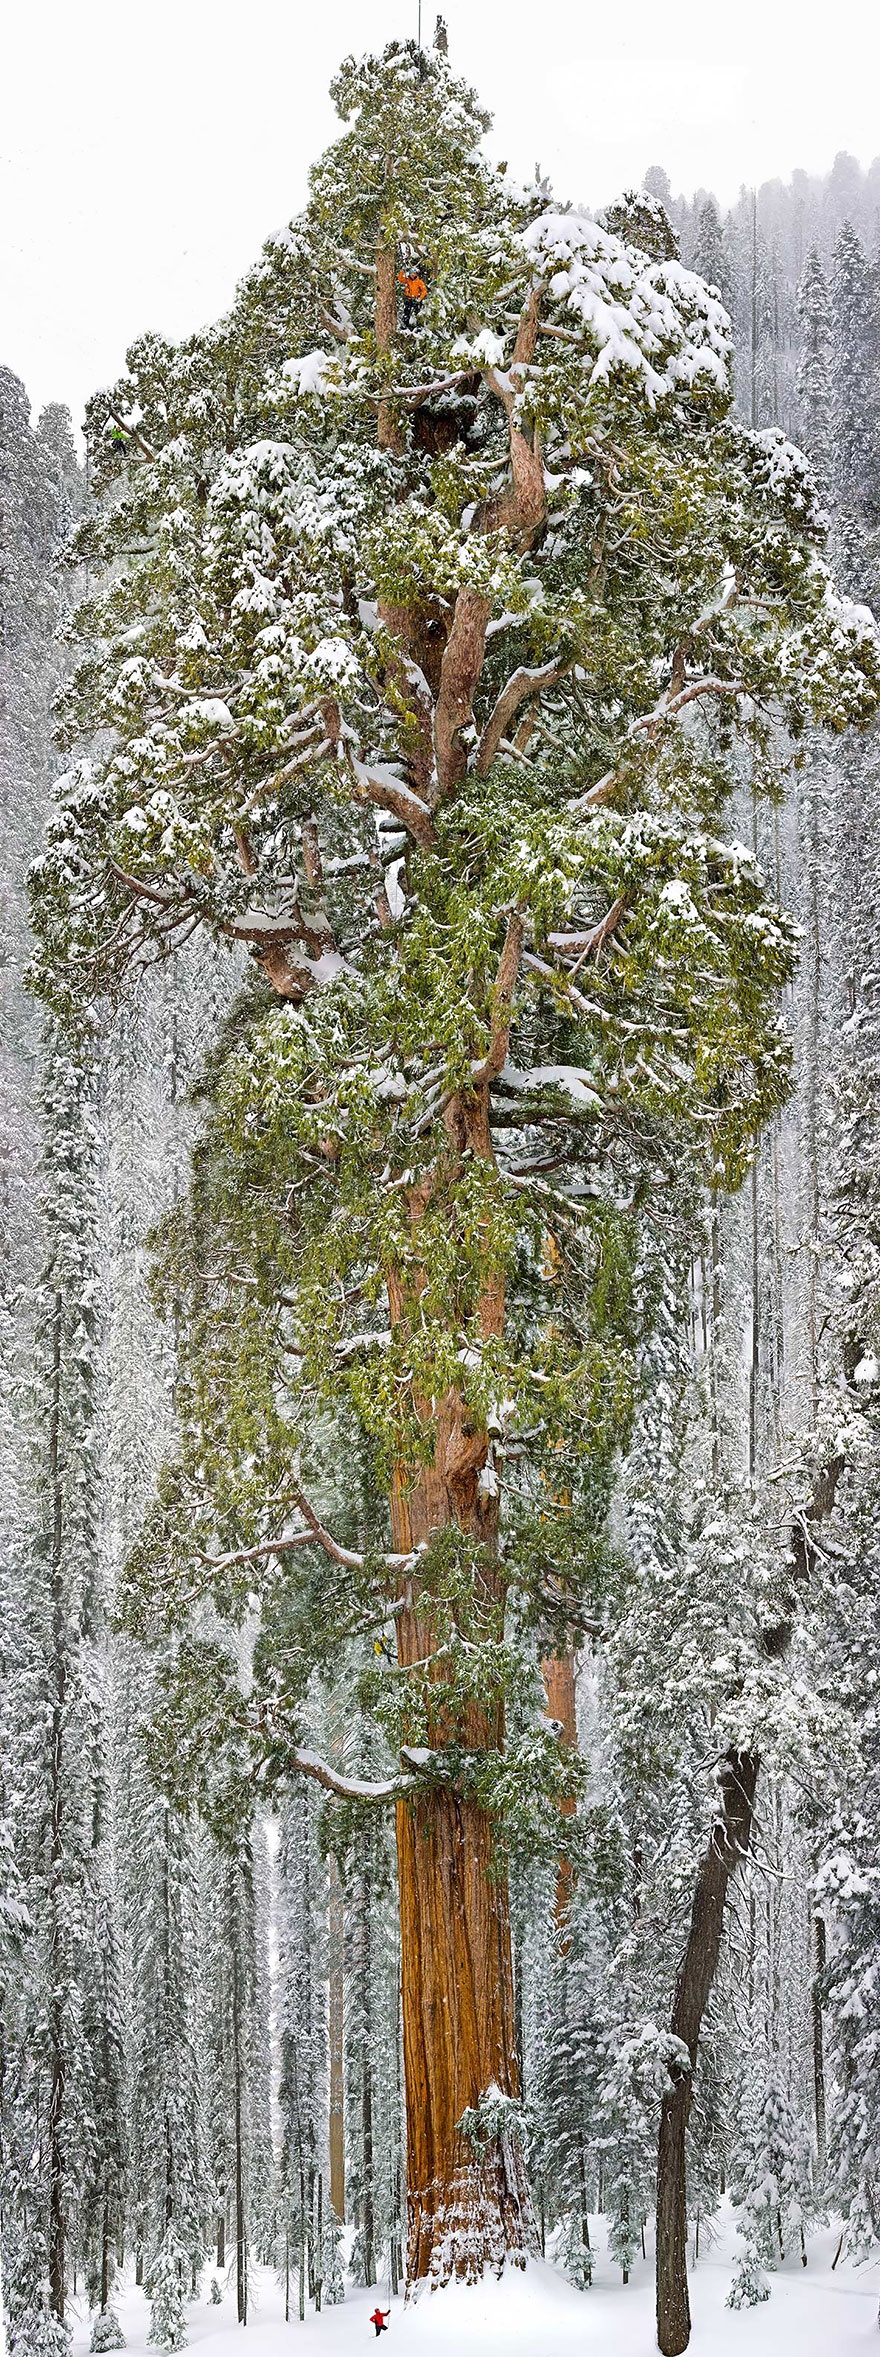 سومین درخت بلند جهان - کالیفرنیا